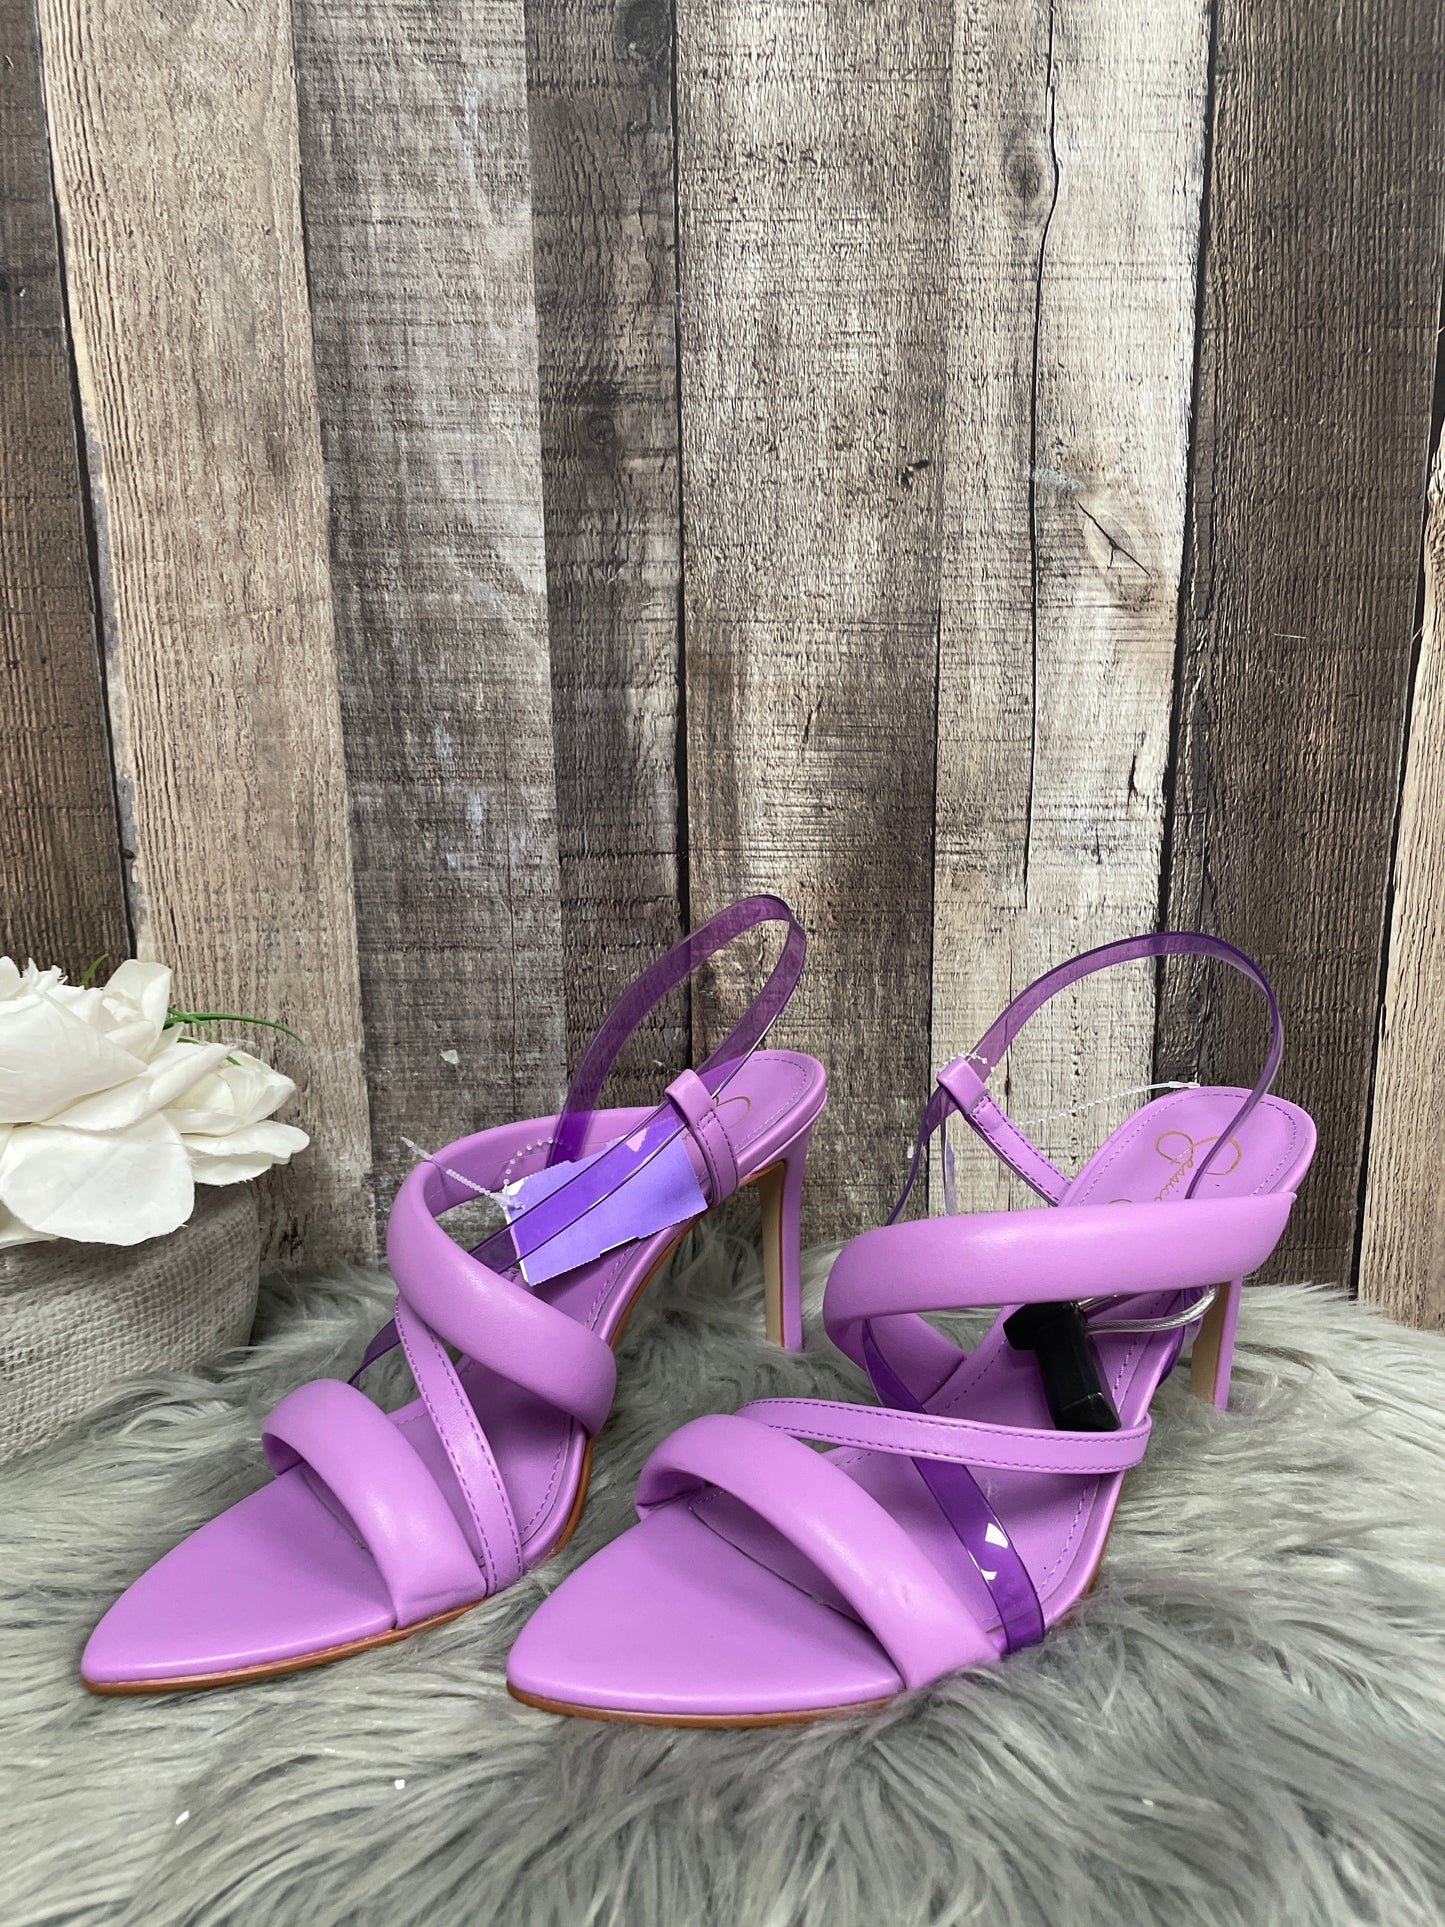 Sandals Heels Stiletto By Jessica Simpson  Size: 9.5